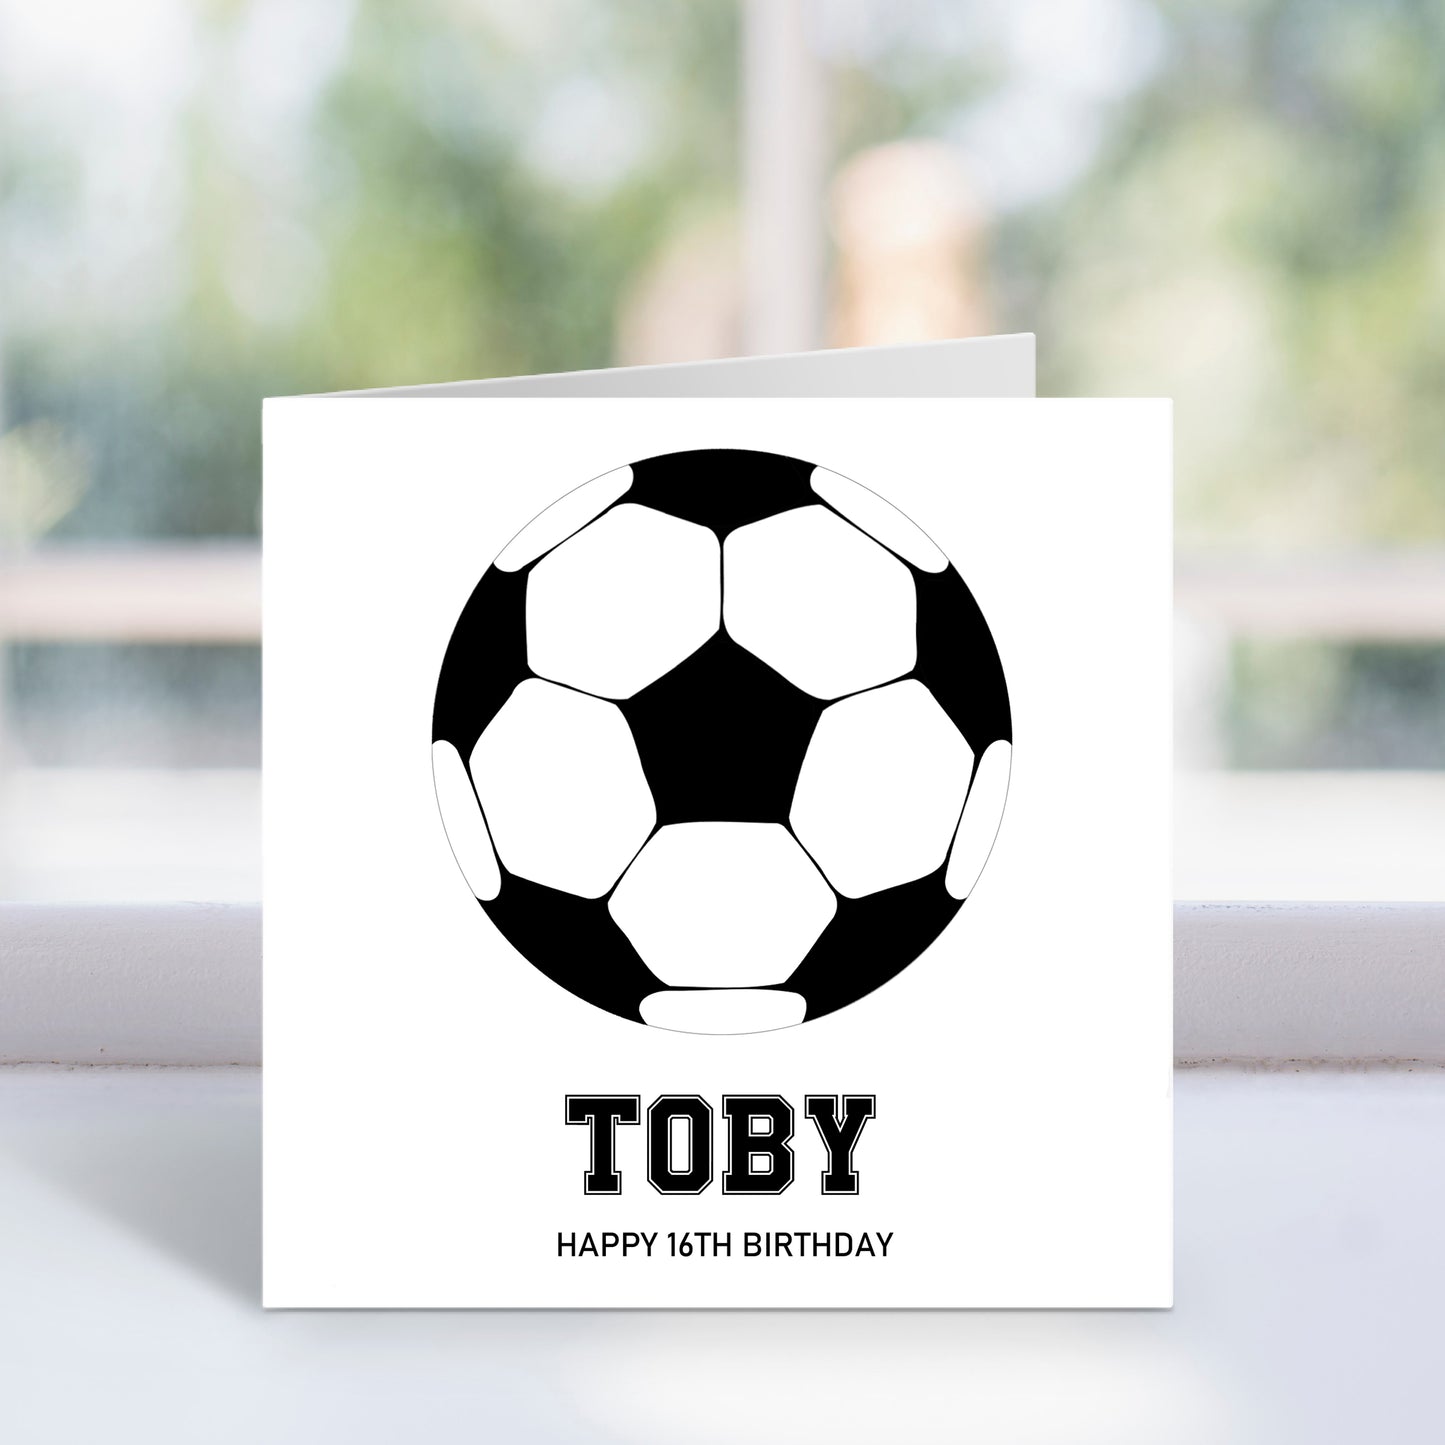 Personalised Football Card